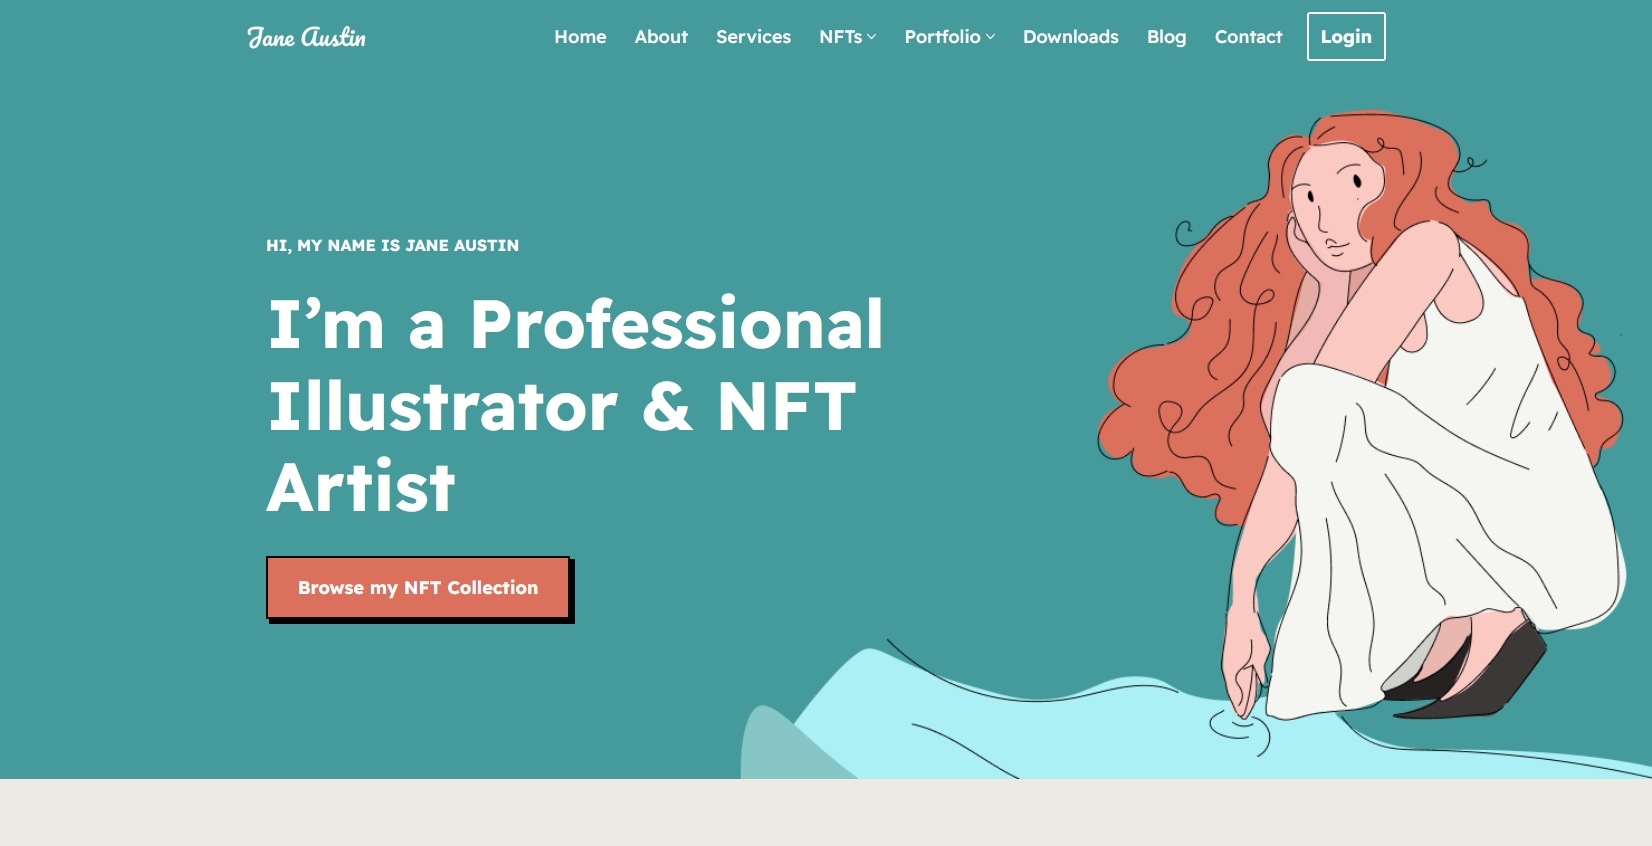 Motyw biznesowy programu NFT Illustrator